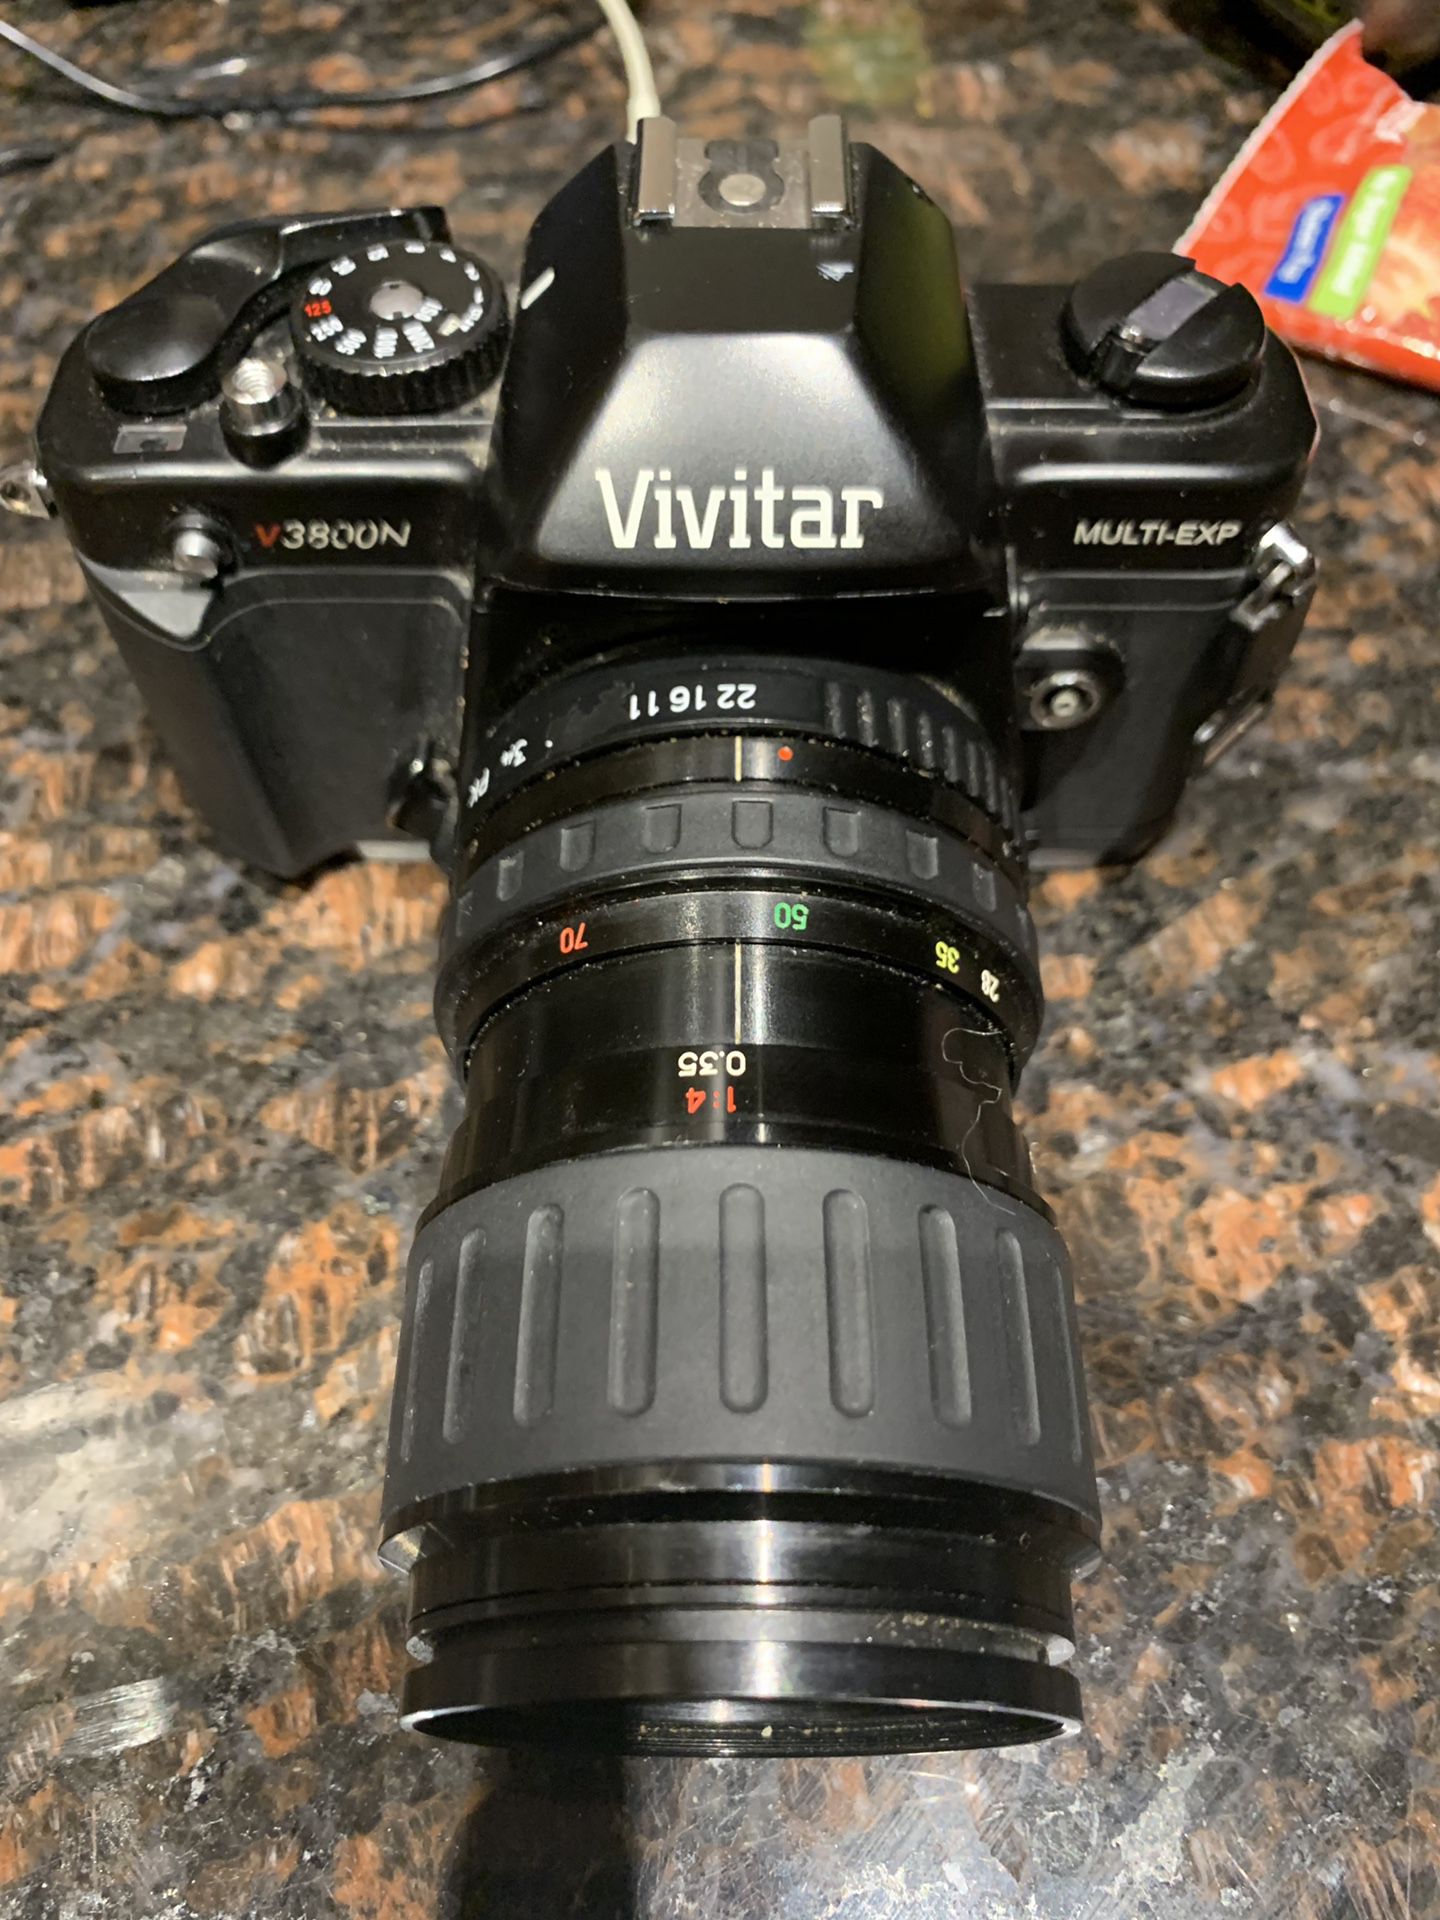 Vivitar V3800n 35mm Manual Slr Camera With 28-70mm Macro Zoom Lens